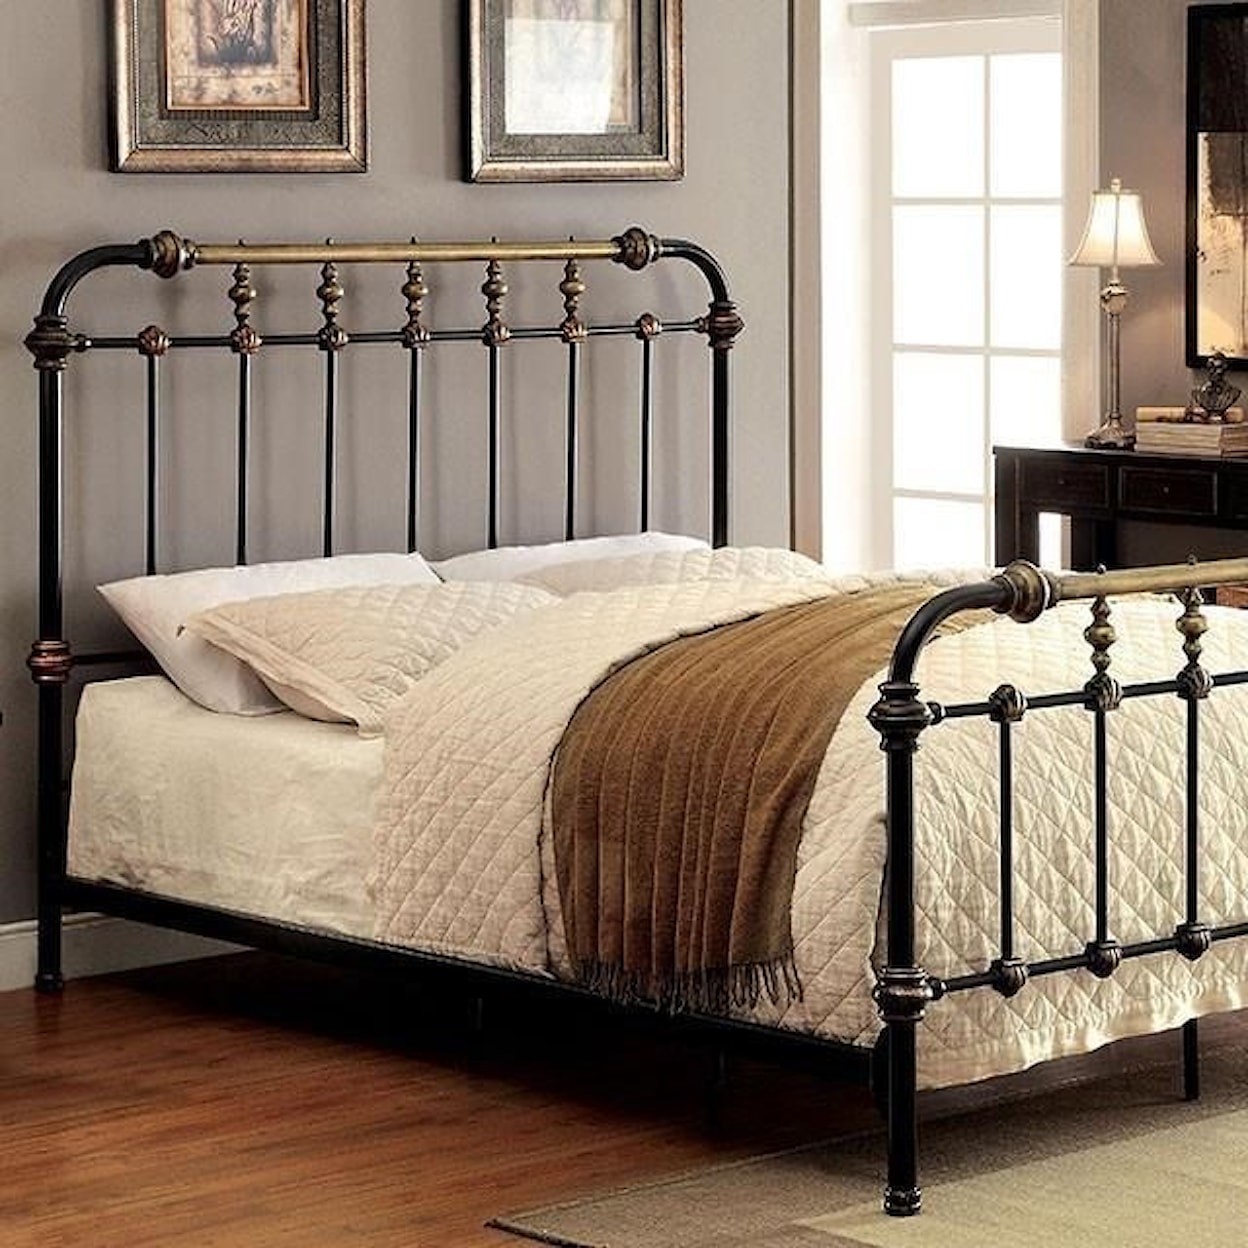 Furniture of America Riana Twin Bed